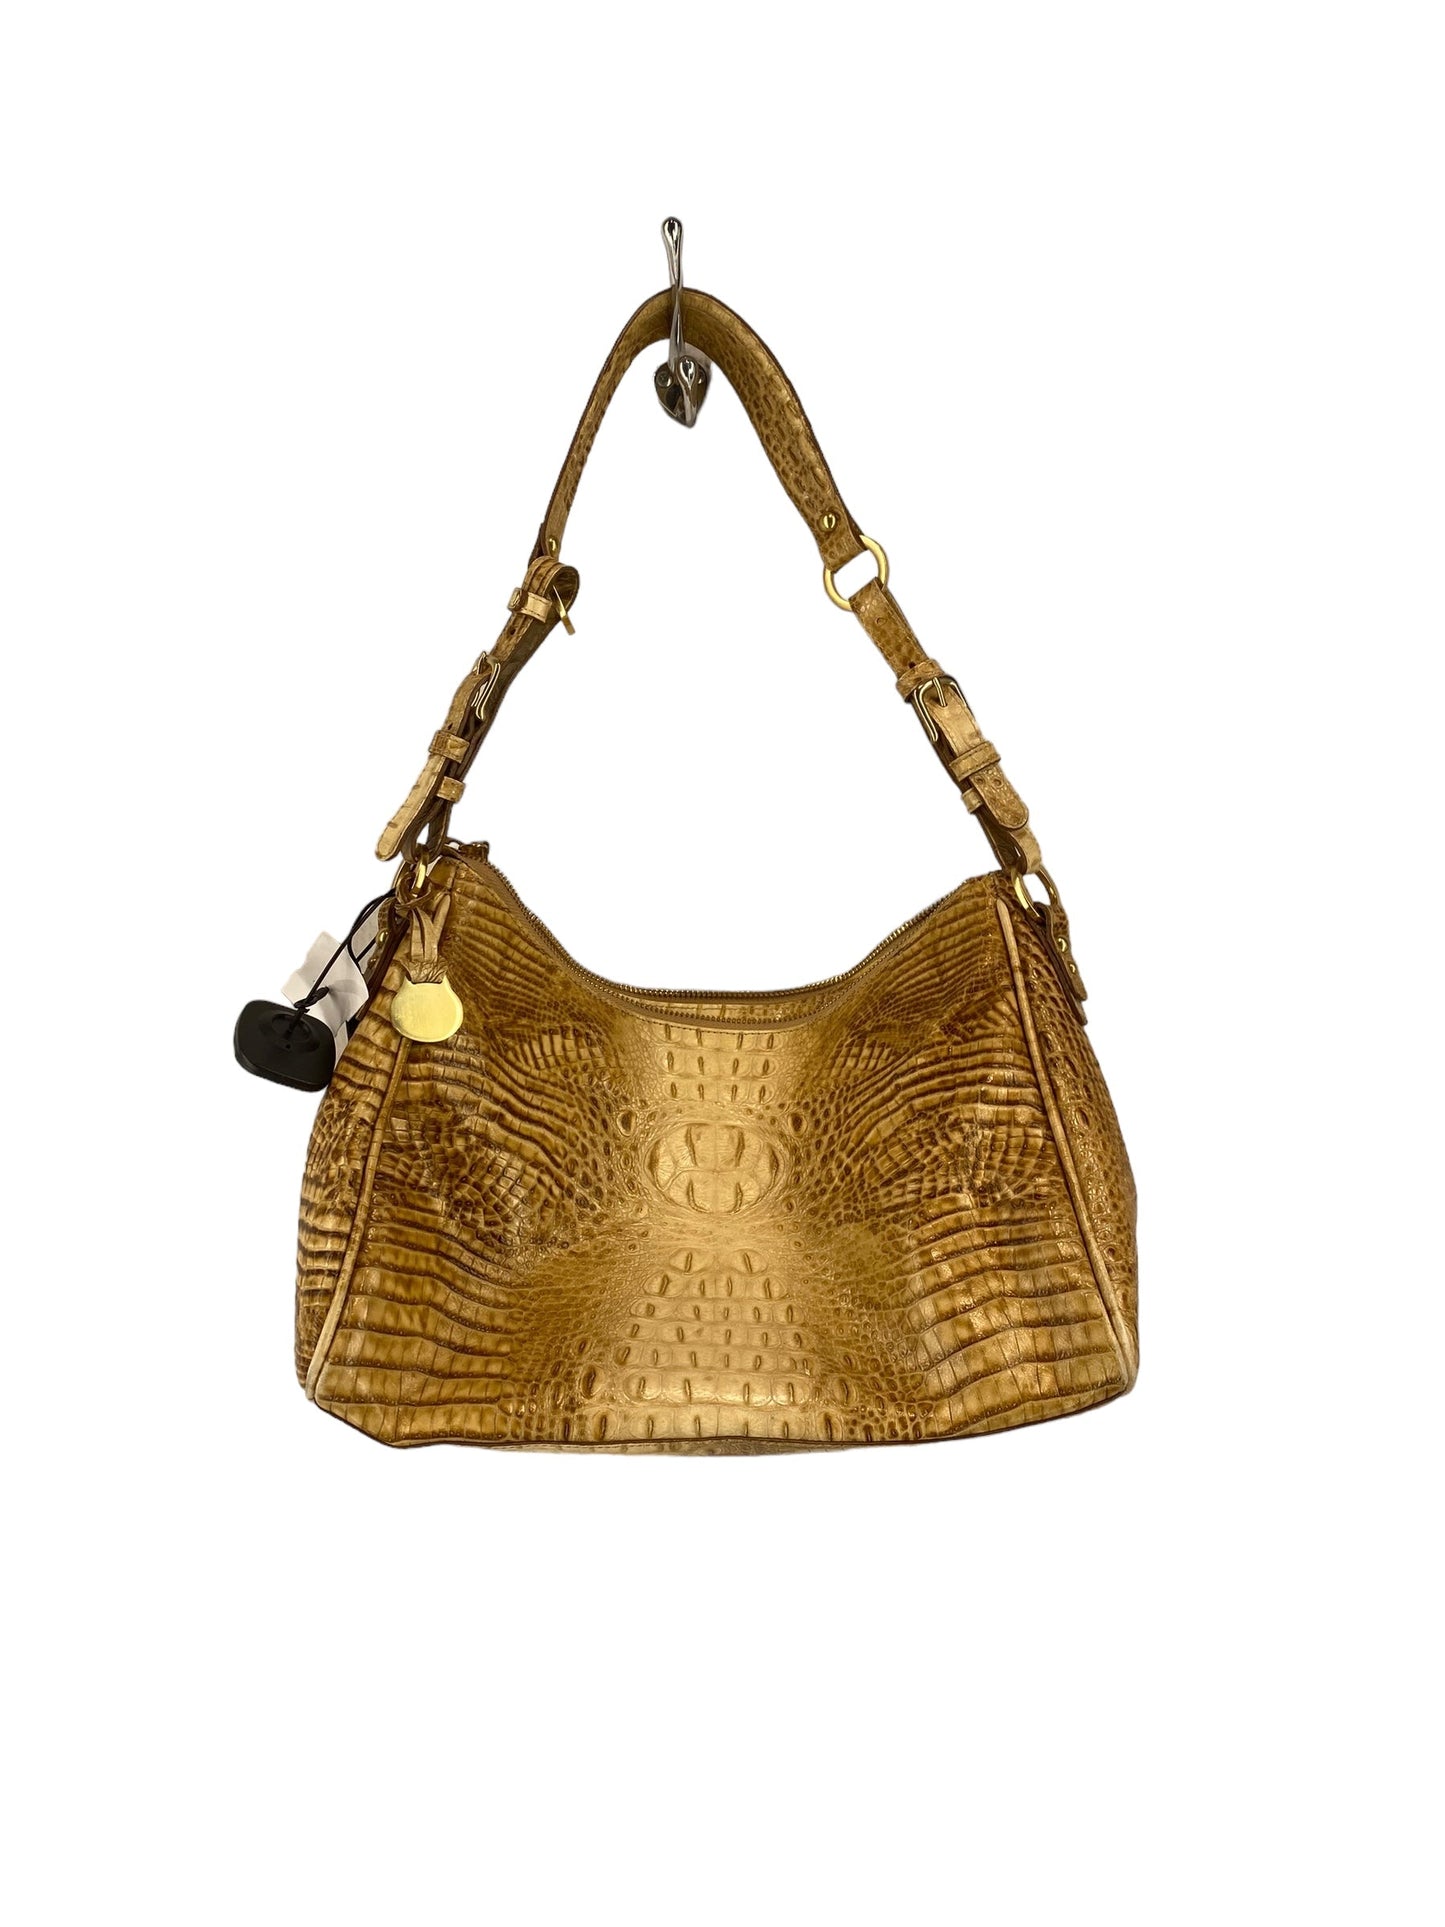 Handbag Leather Brahmin, Size Medium